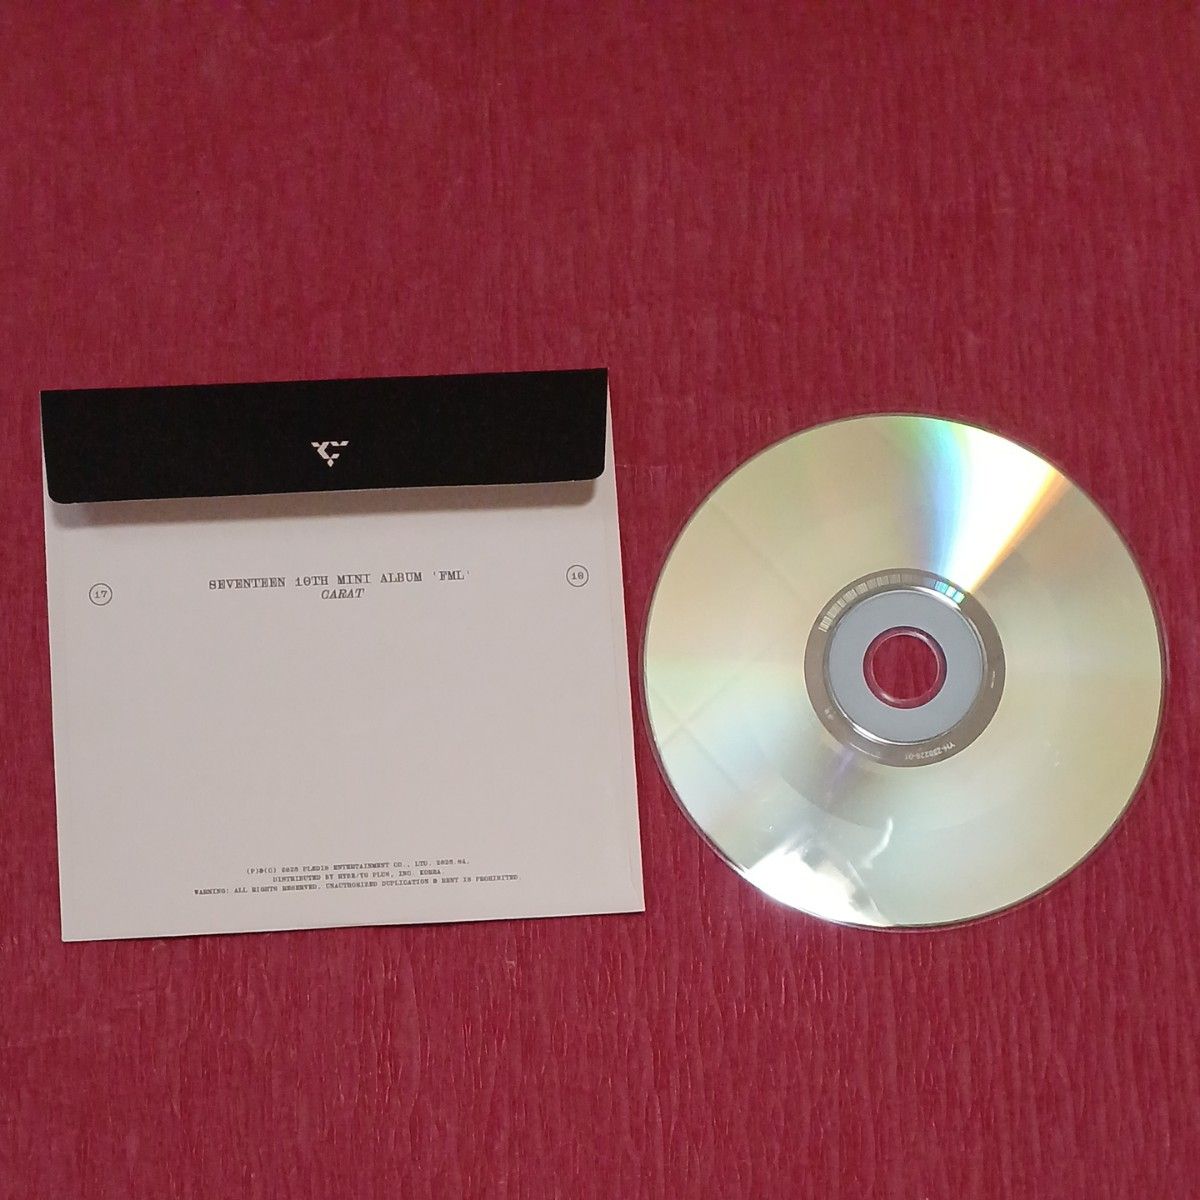 SEVENTEEN　ミニアルバム　FML  CD１枚と歌詞カードのみ　簡易包装簡易発送